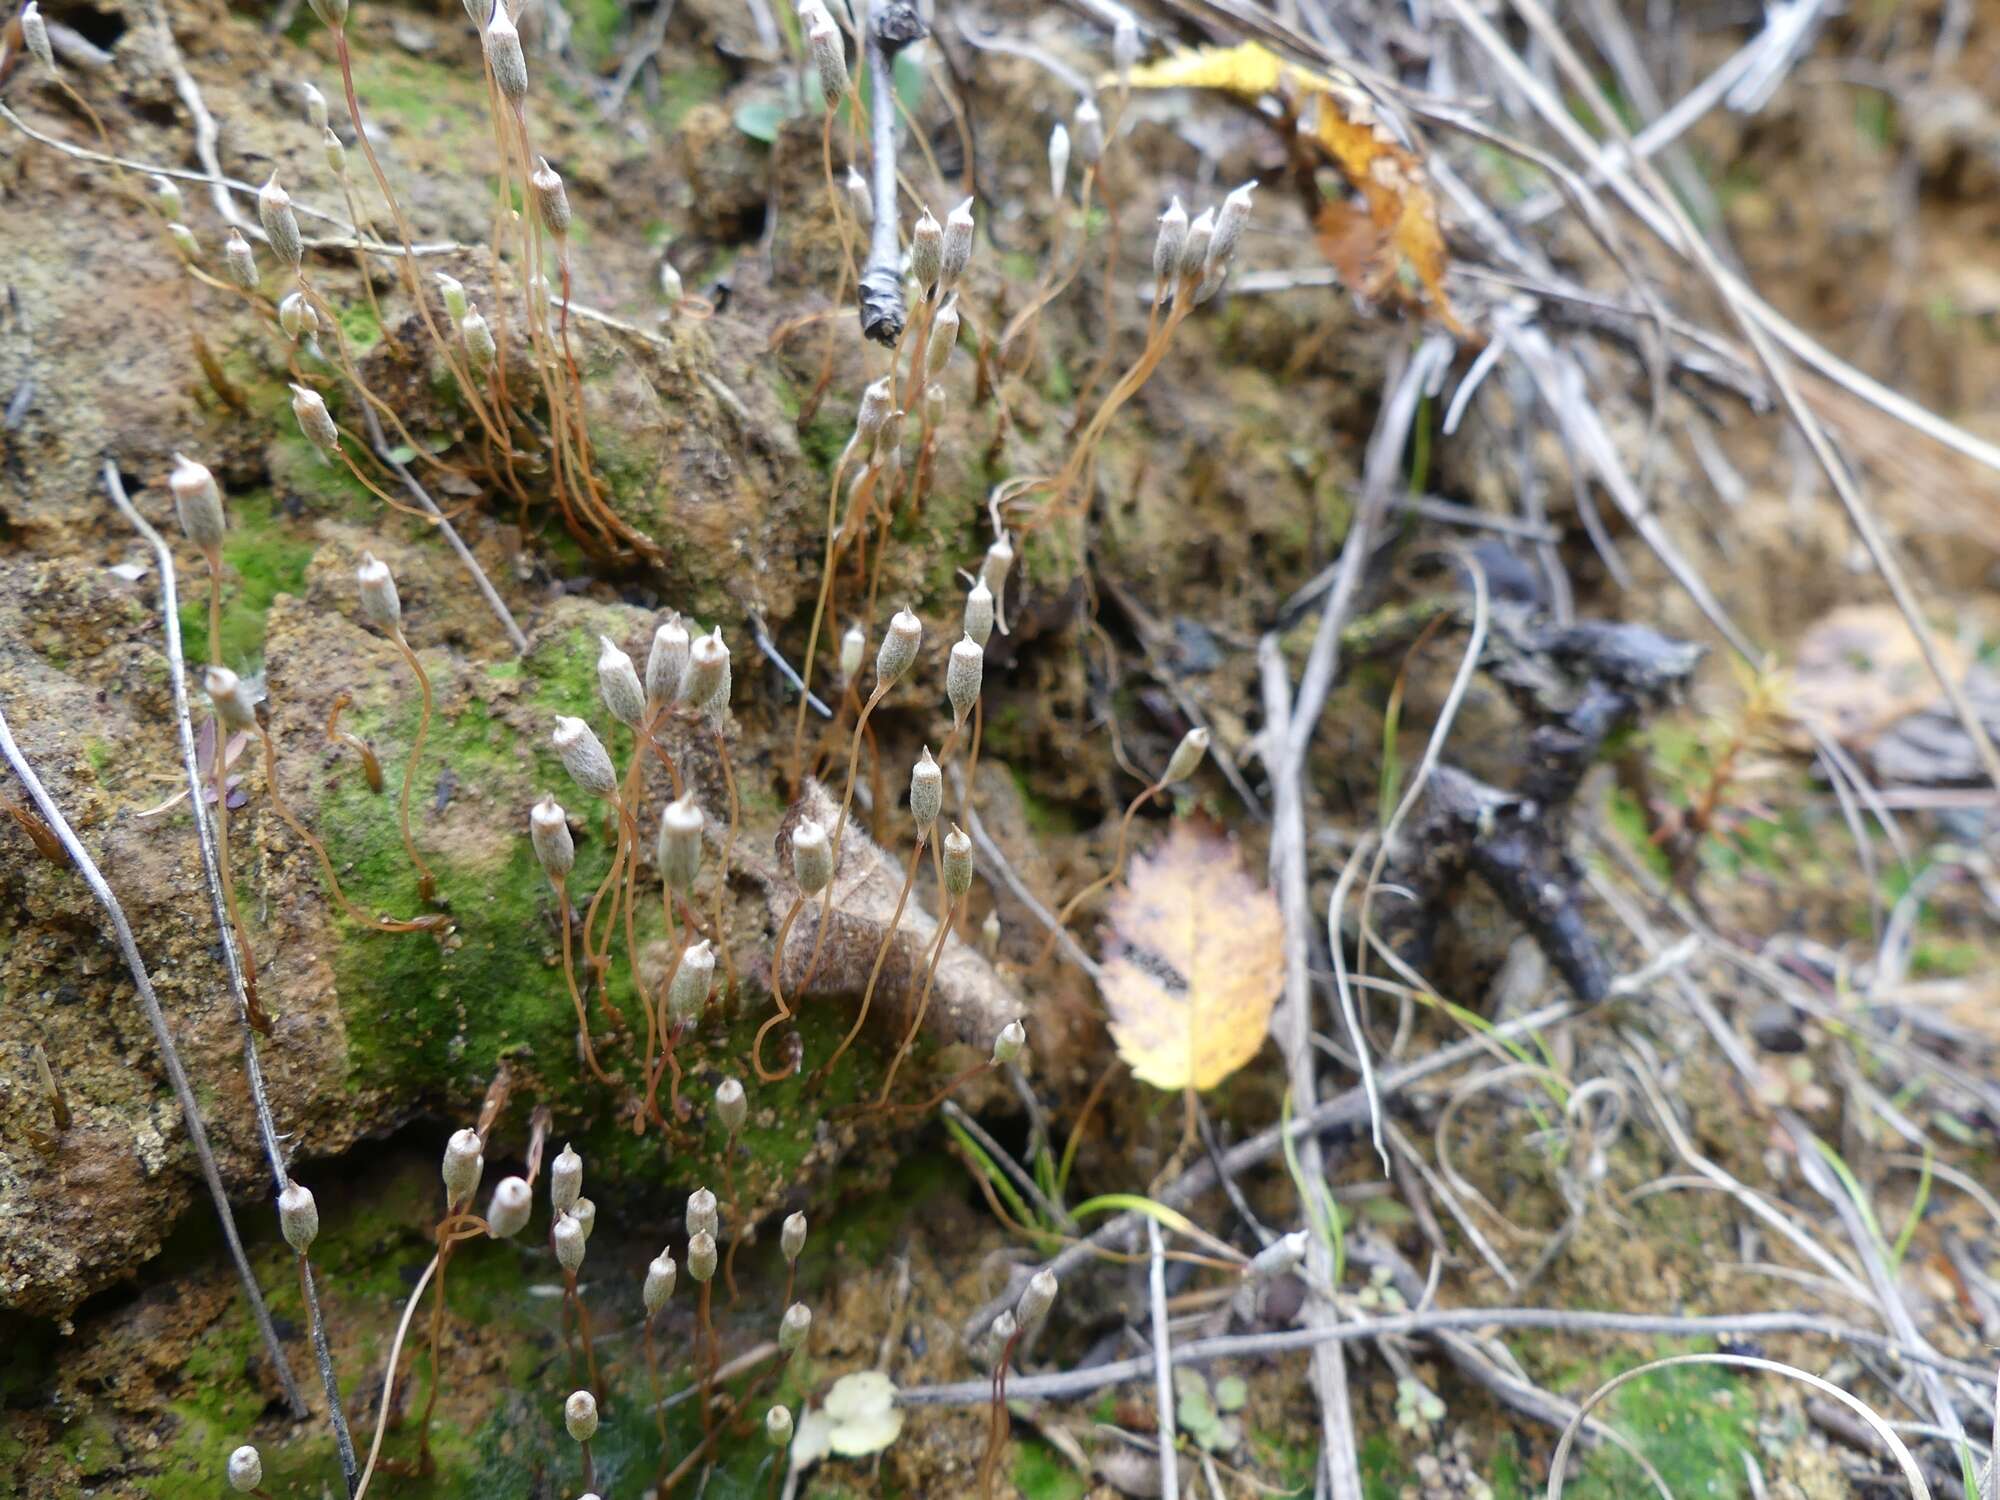 Image of Pennsylvania pogonatum moss